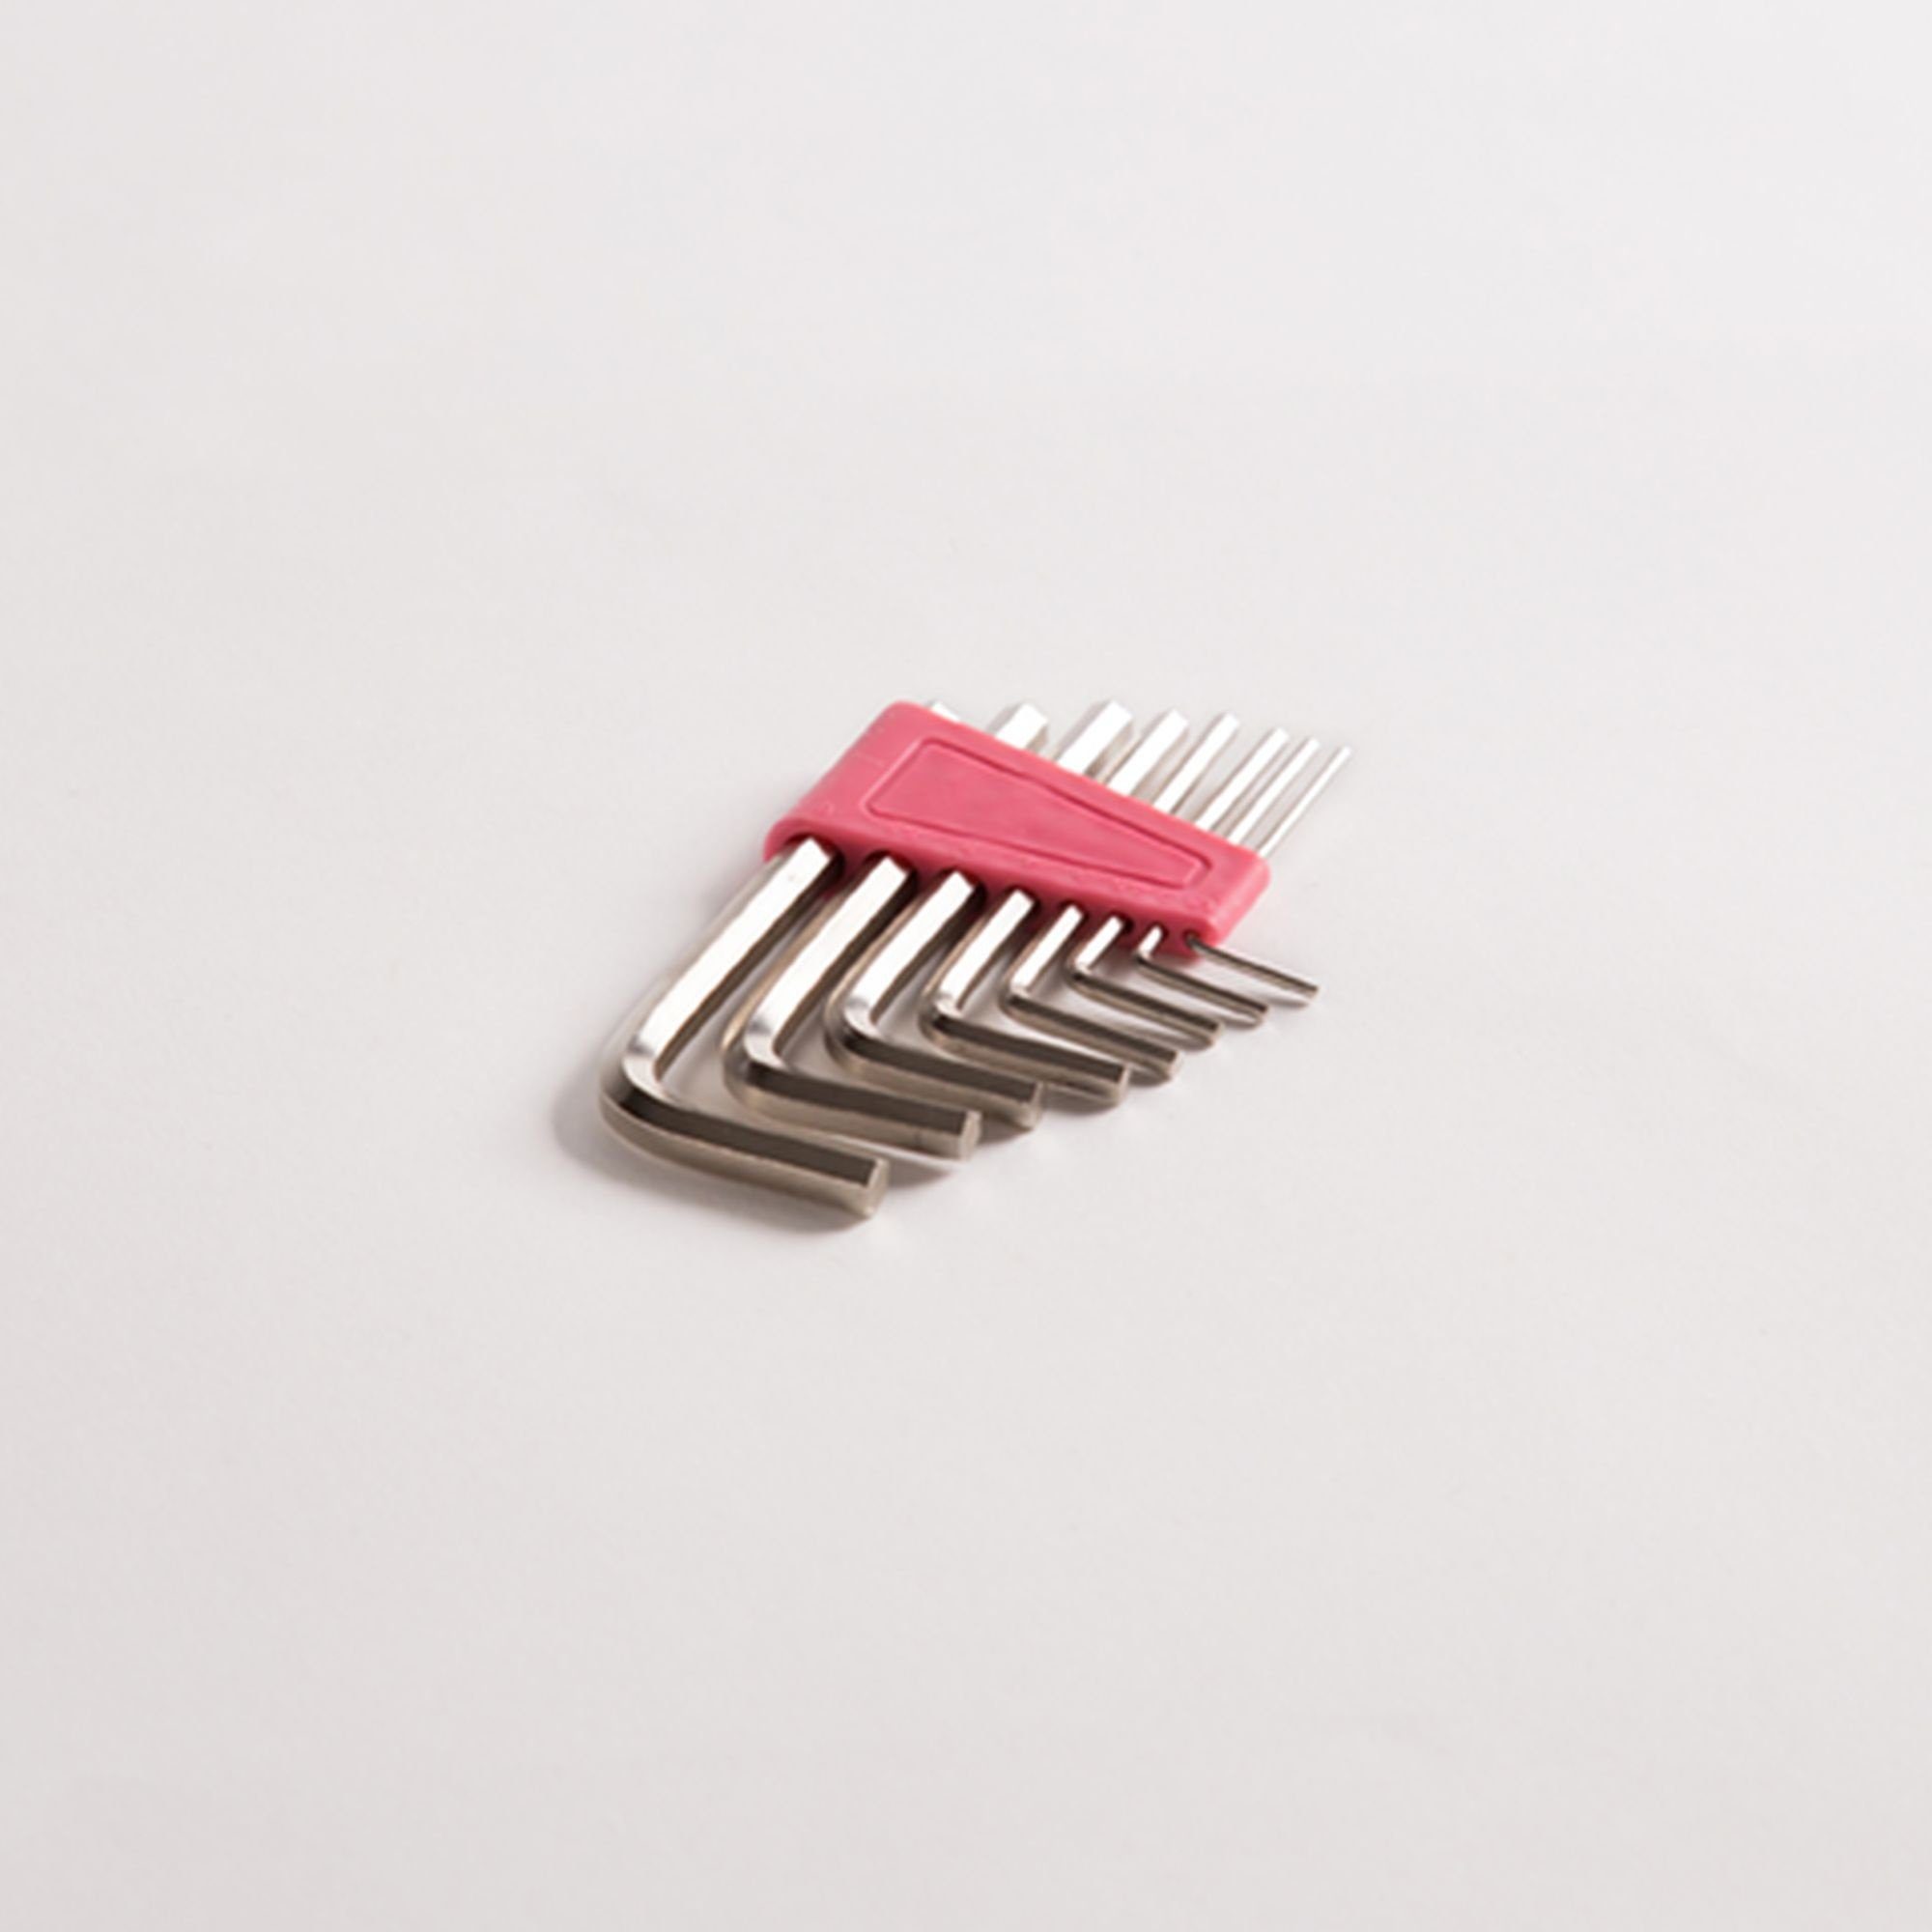 qpool24 Inbusschlüssel, Figofix rosa Inbusschlüssel | Stiftschlüssel